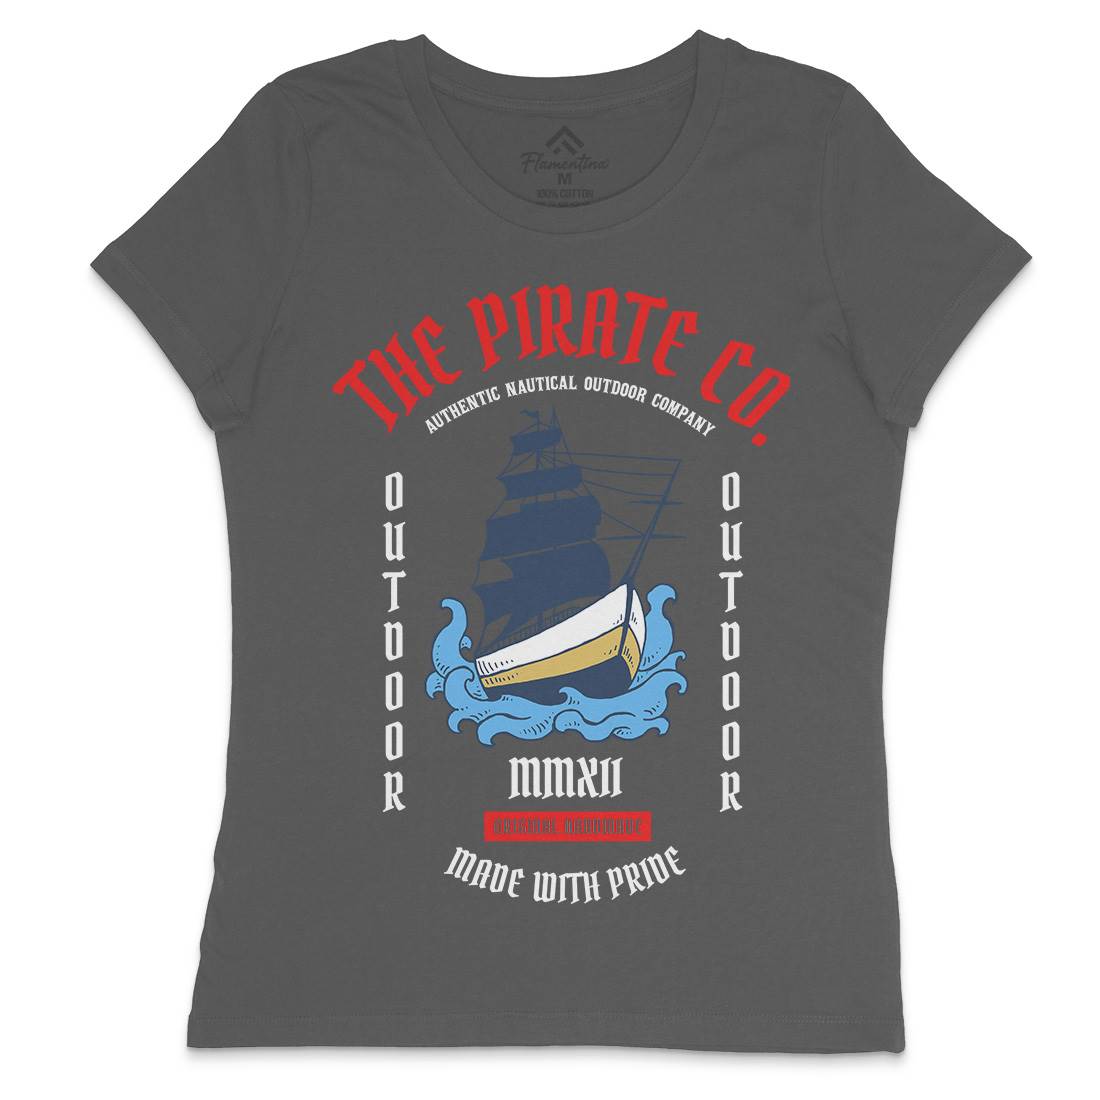 The Ship Womens Crew Neck T-Shirt Navy C790